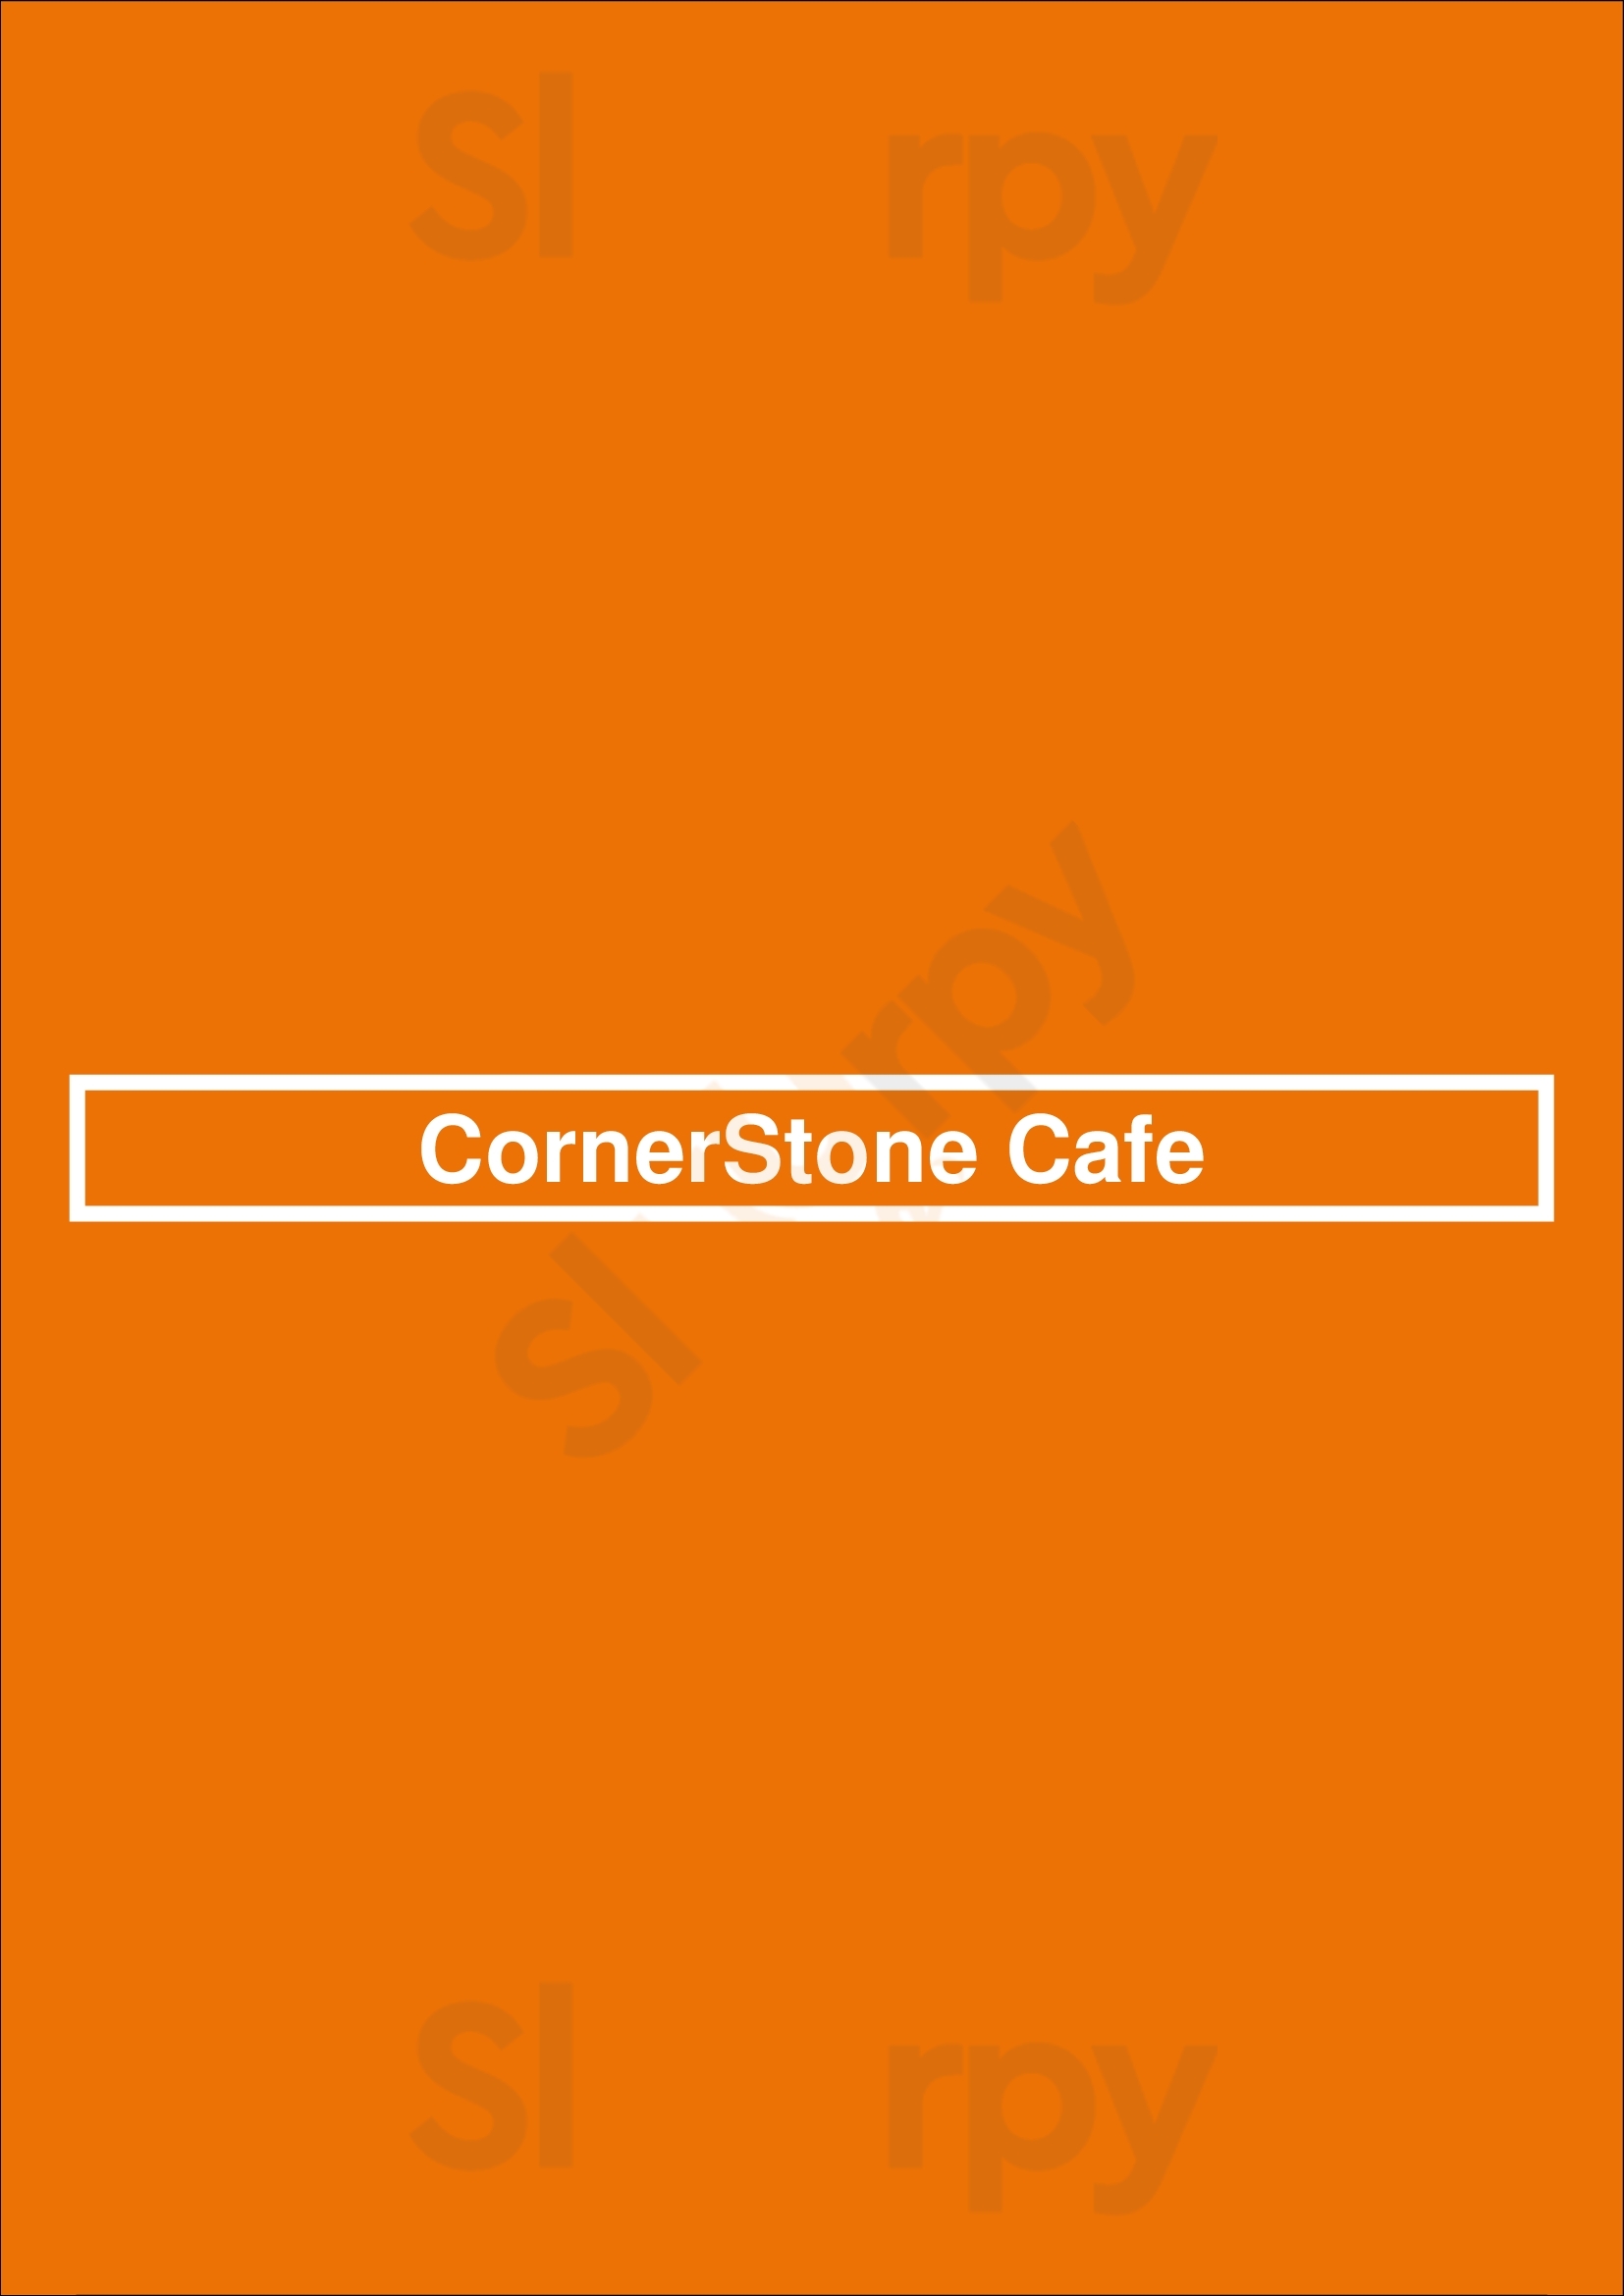 Cornerstone Cafe Chicago Menu - 1